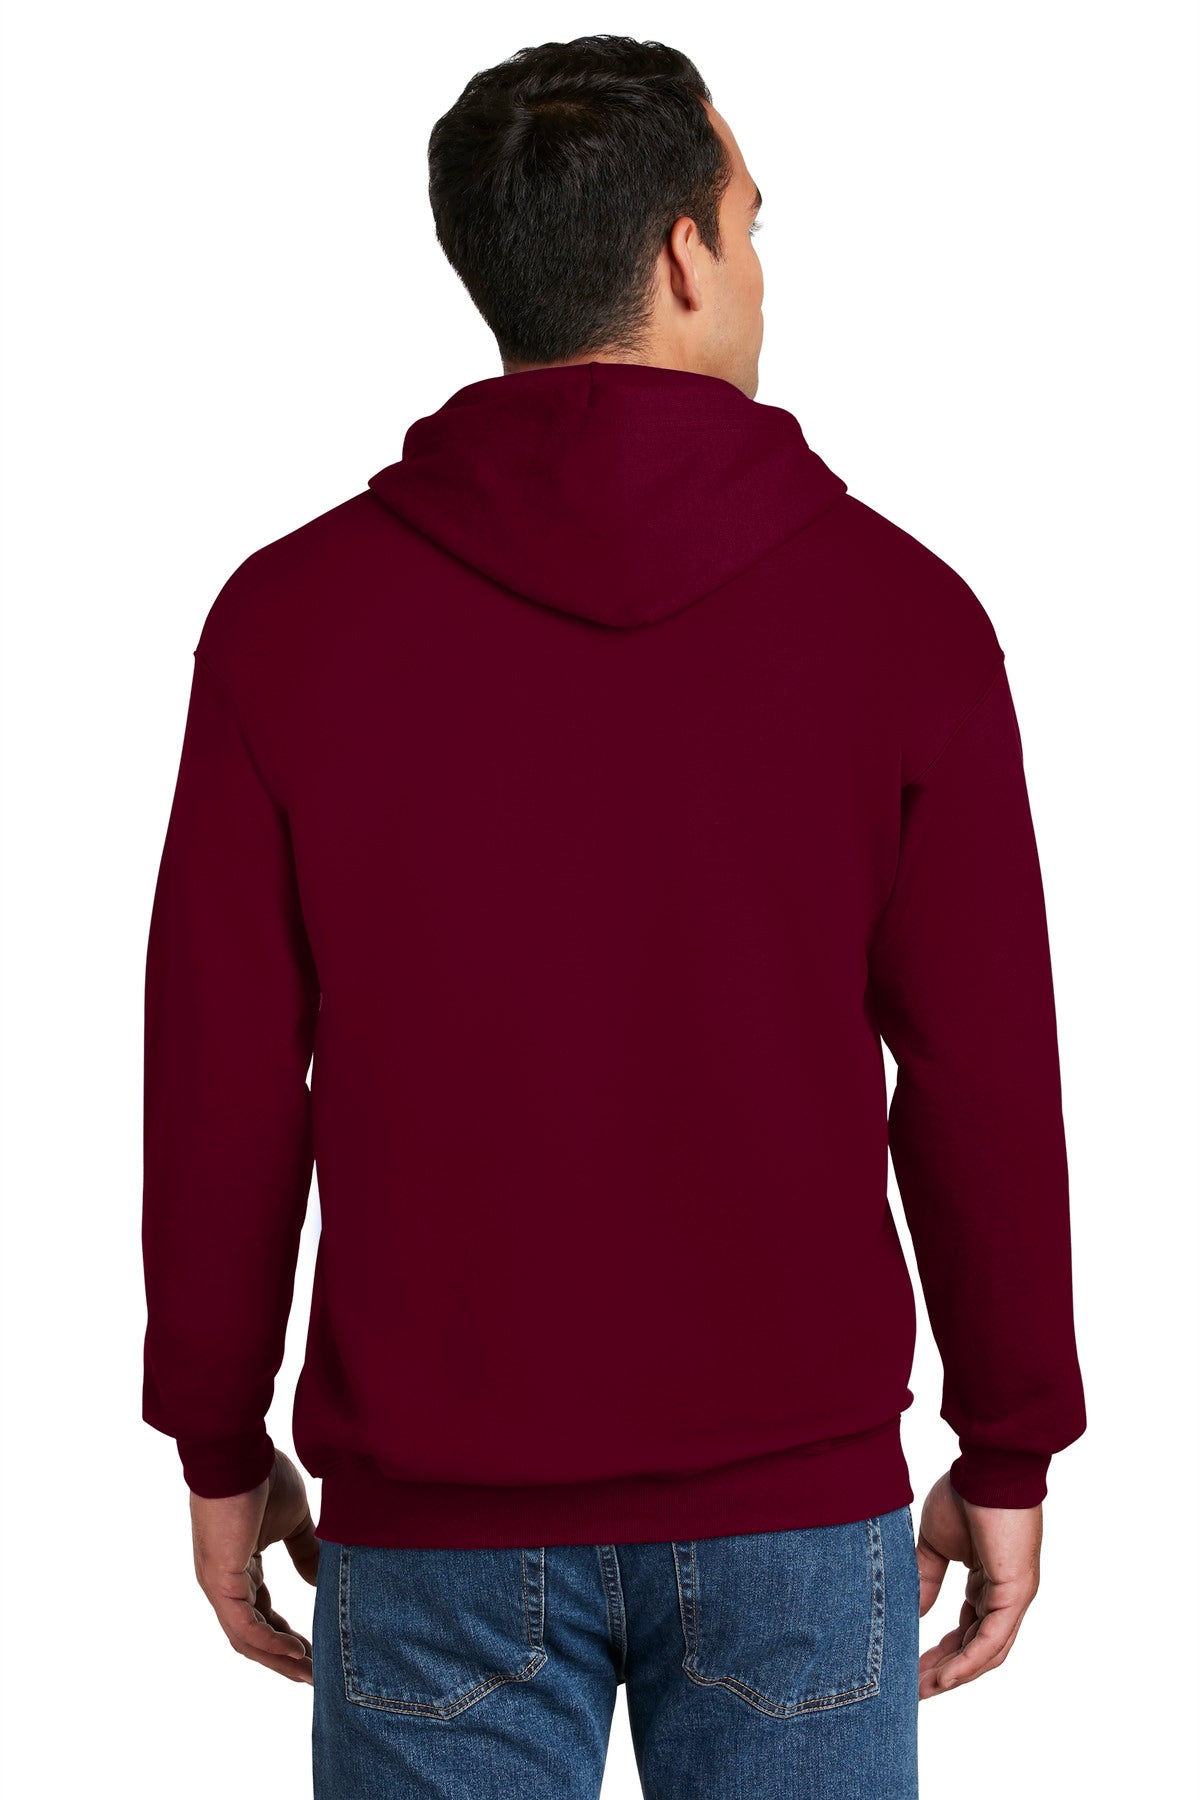 Hanes Ultimate Cotton - Full-Zip Hooded Sweatshirt. F283